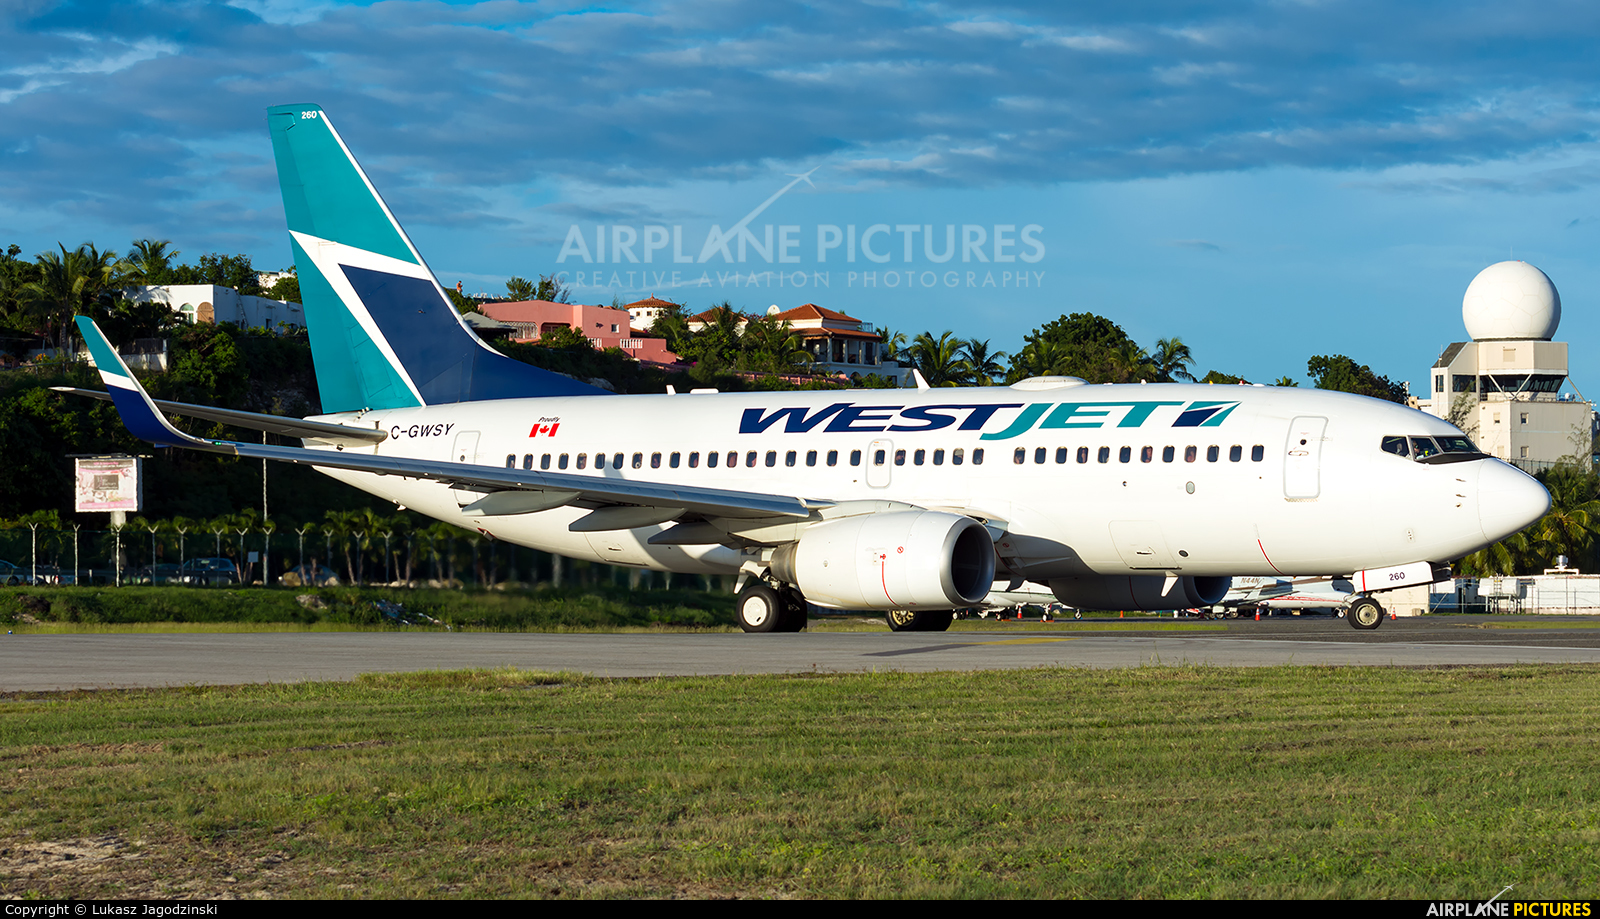 WestJet Airlines C-GWSY aircraft at Sint Maarten - Princess Juliana Intl